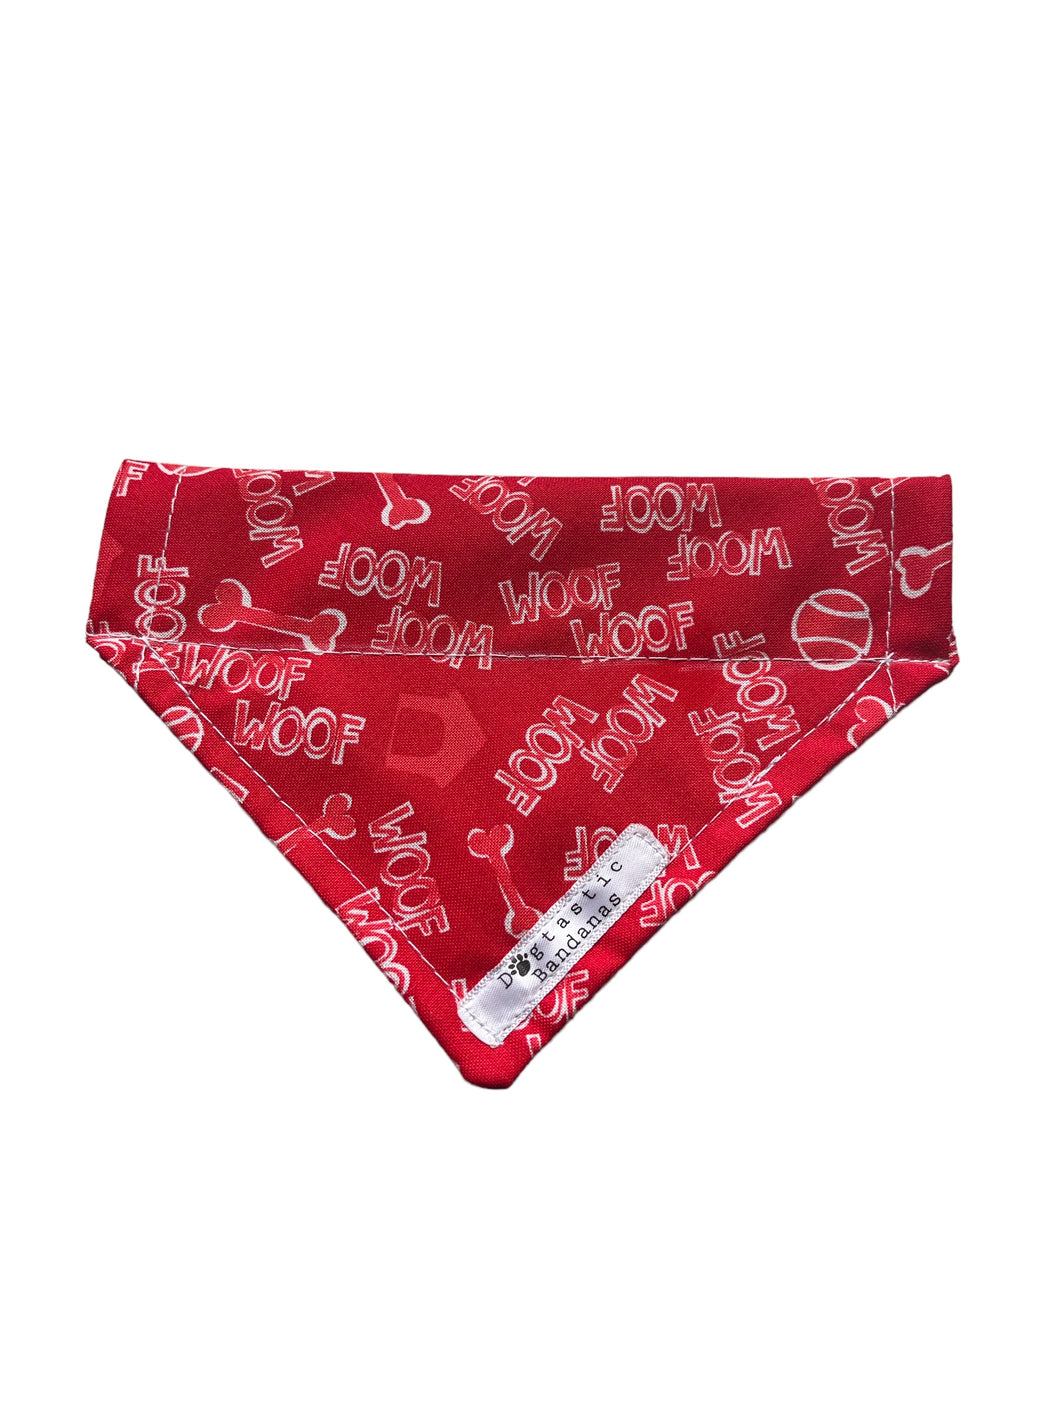 Red woof dog/pet bandana